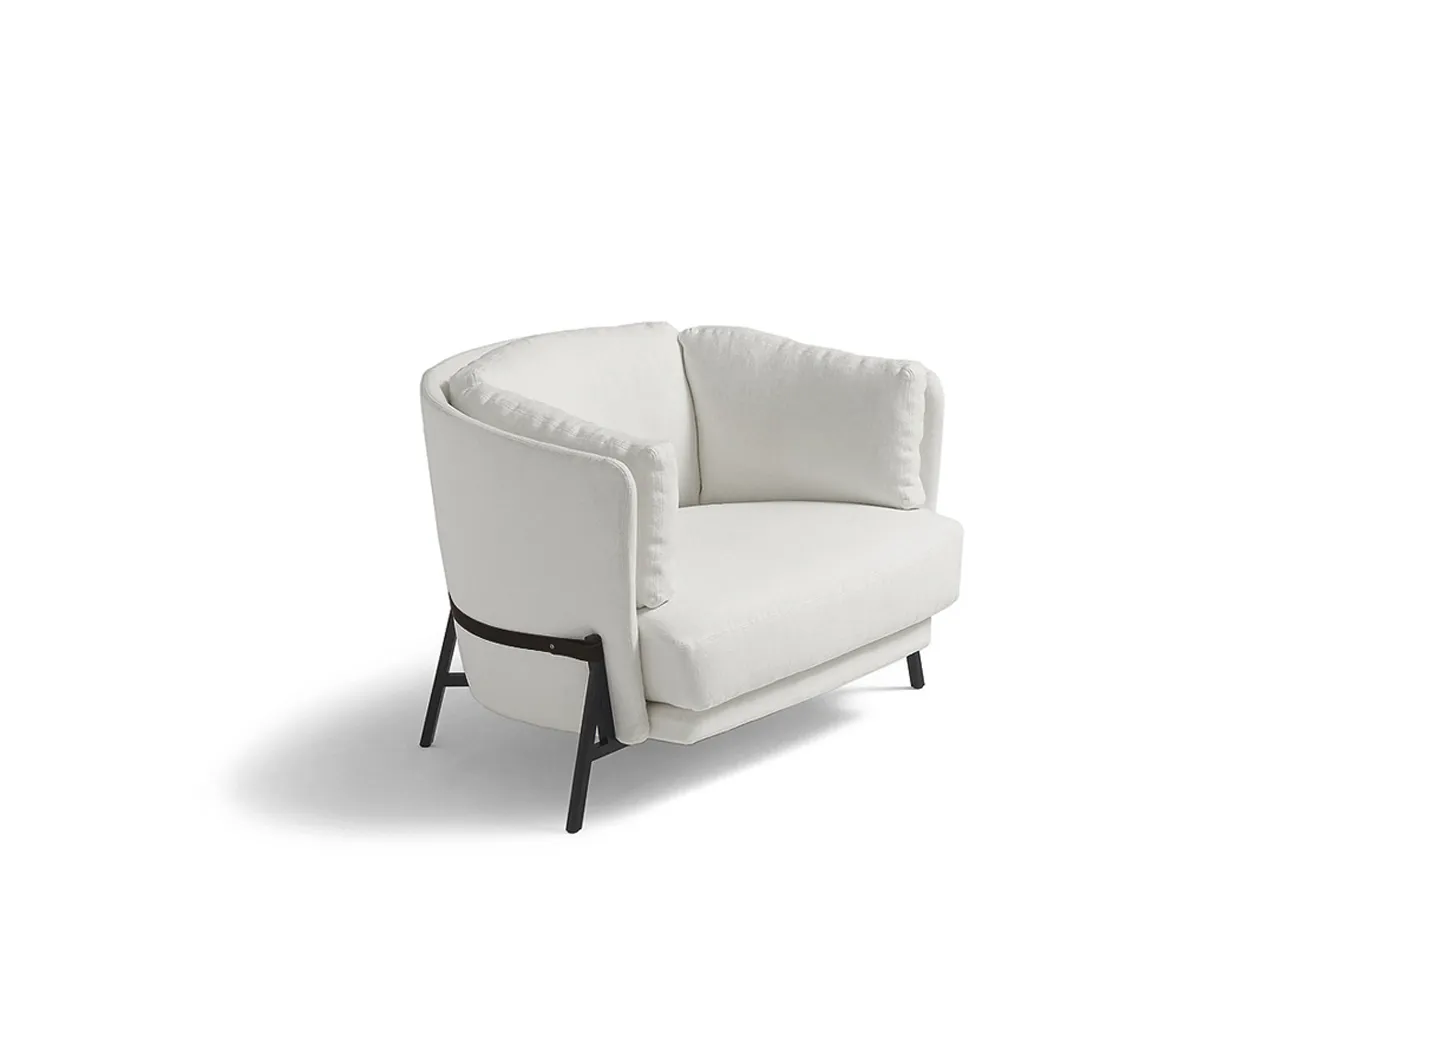 Cradle armchair - Fabric version